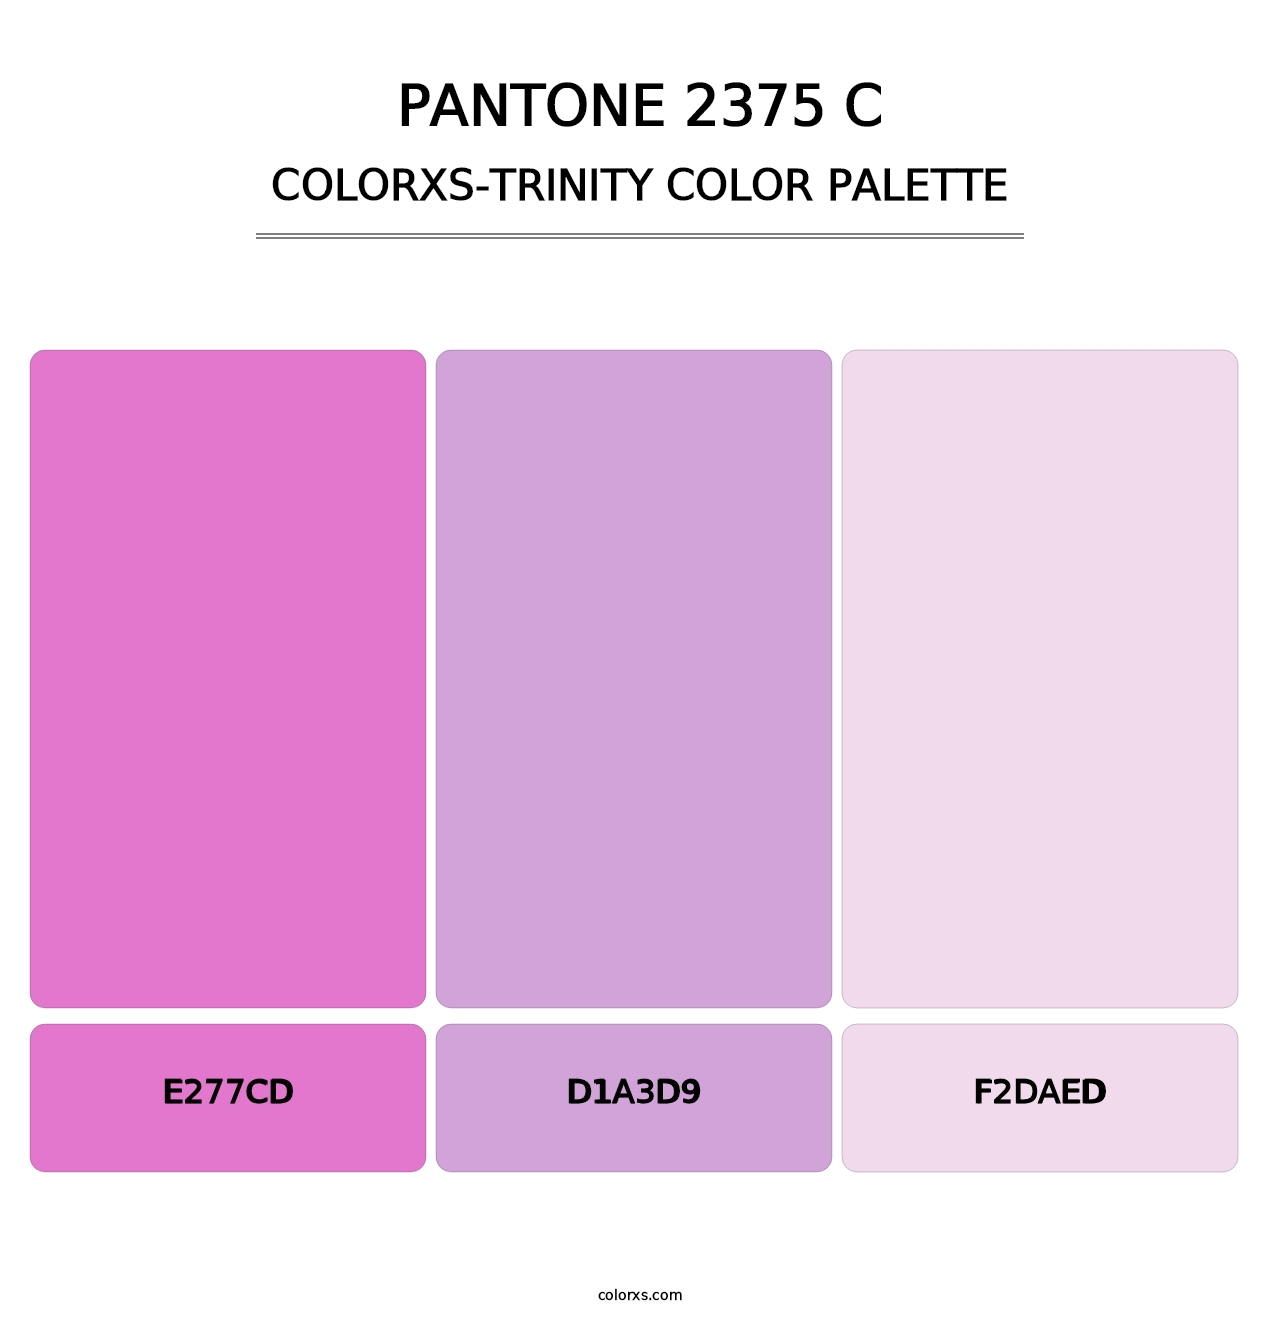 PANTONE 2375 C - Colorxs Trinity Palette